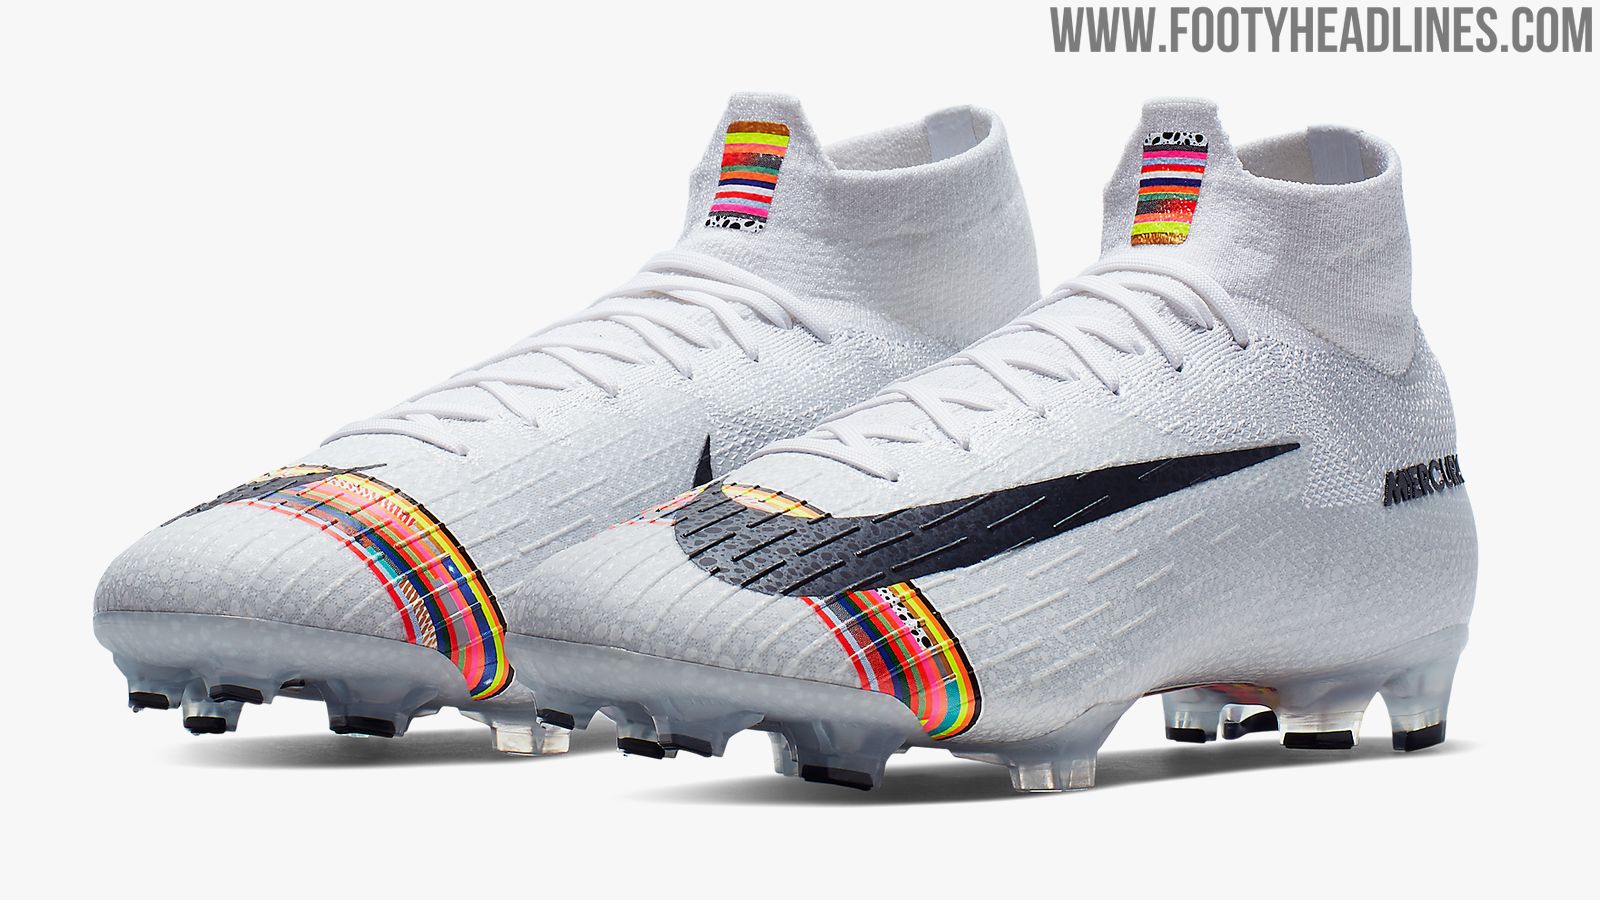 Nike Mercurial Cristiano Ronaldo 'Lvl Boots Released - Headlines